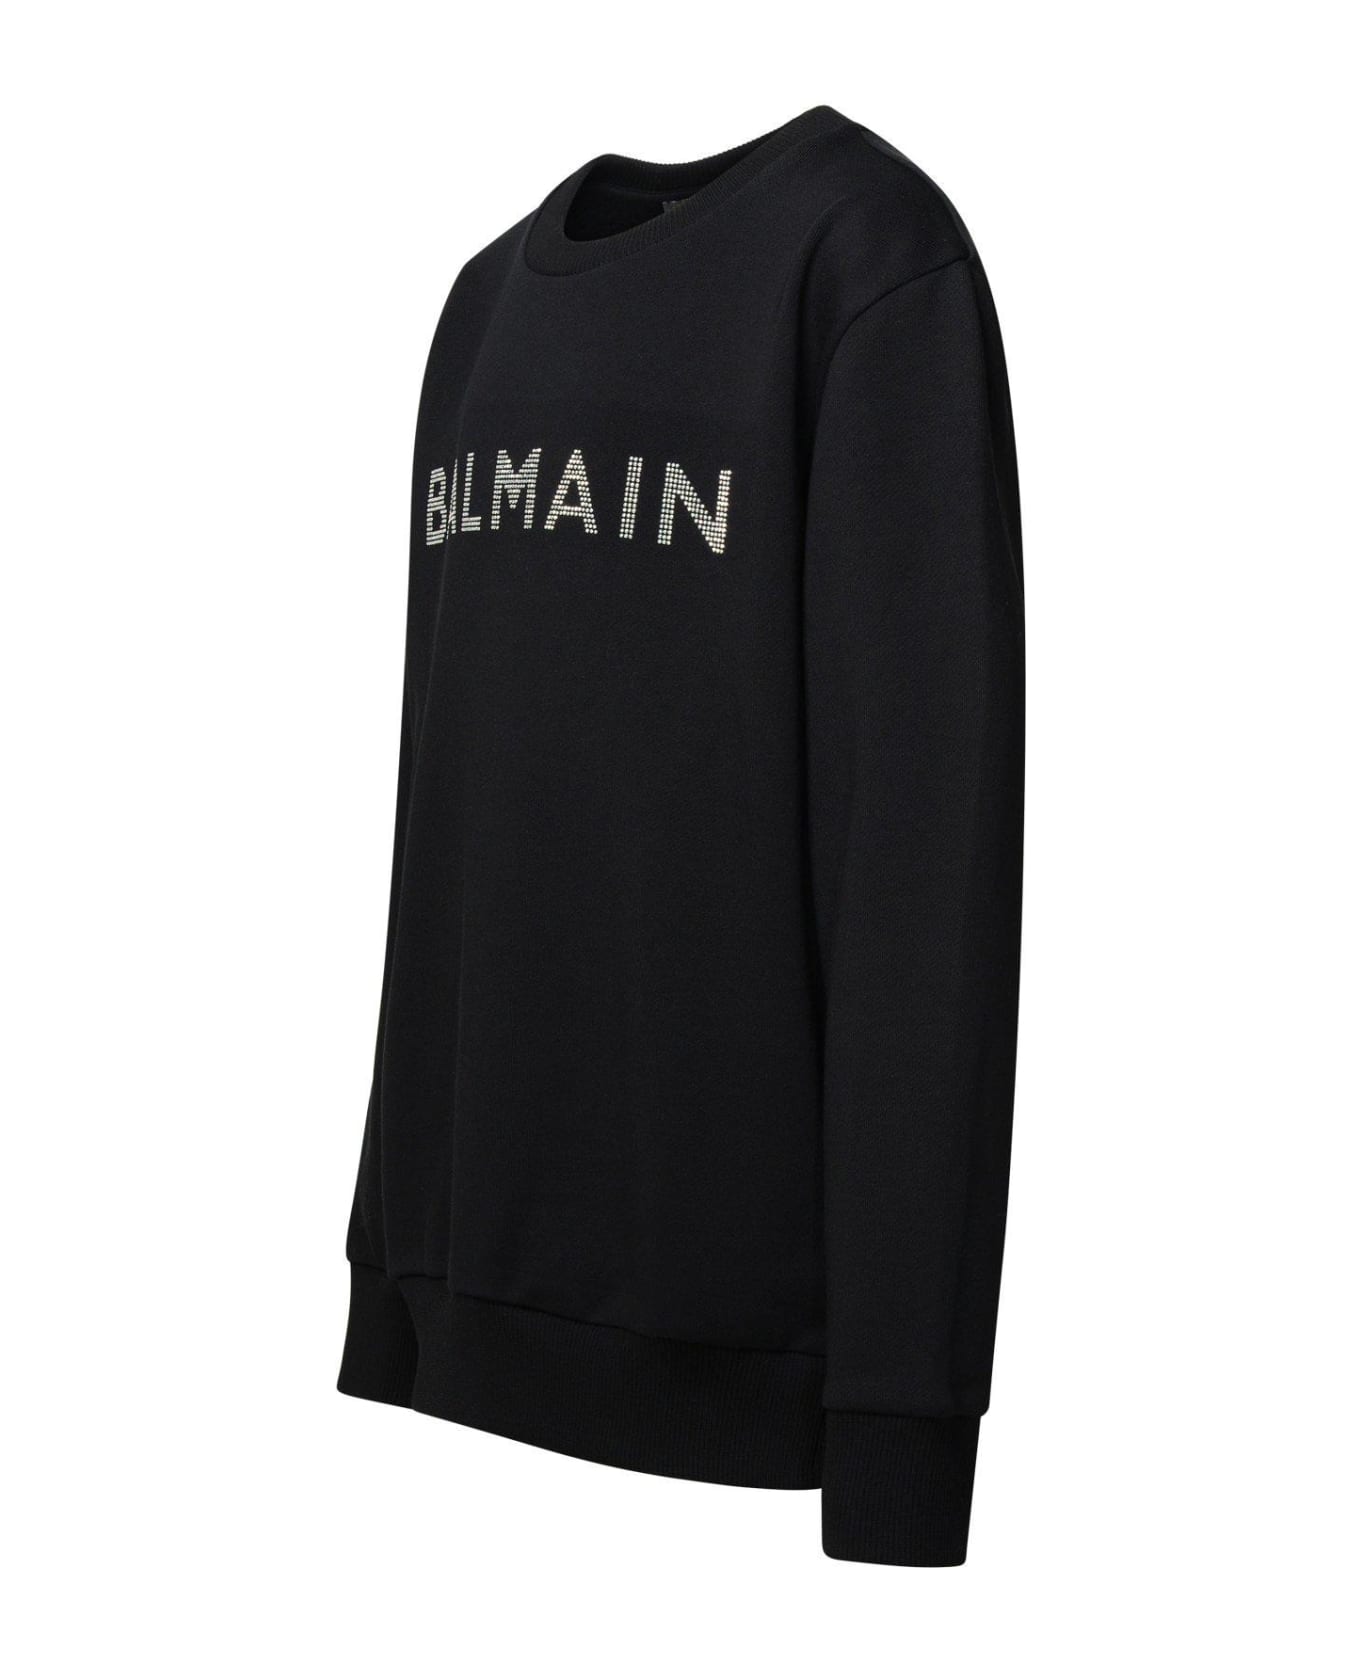 Balmain Logo Embellished Crewneck Sweatshirt - Black/silver